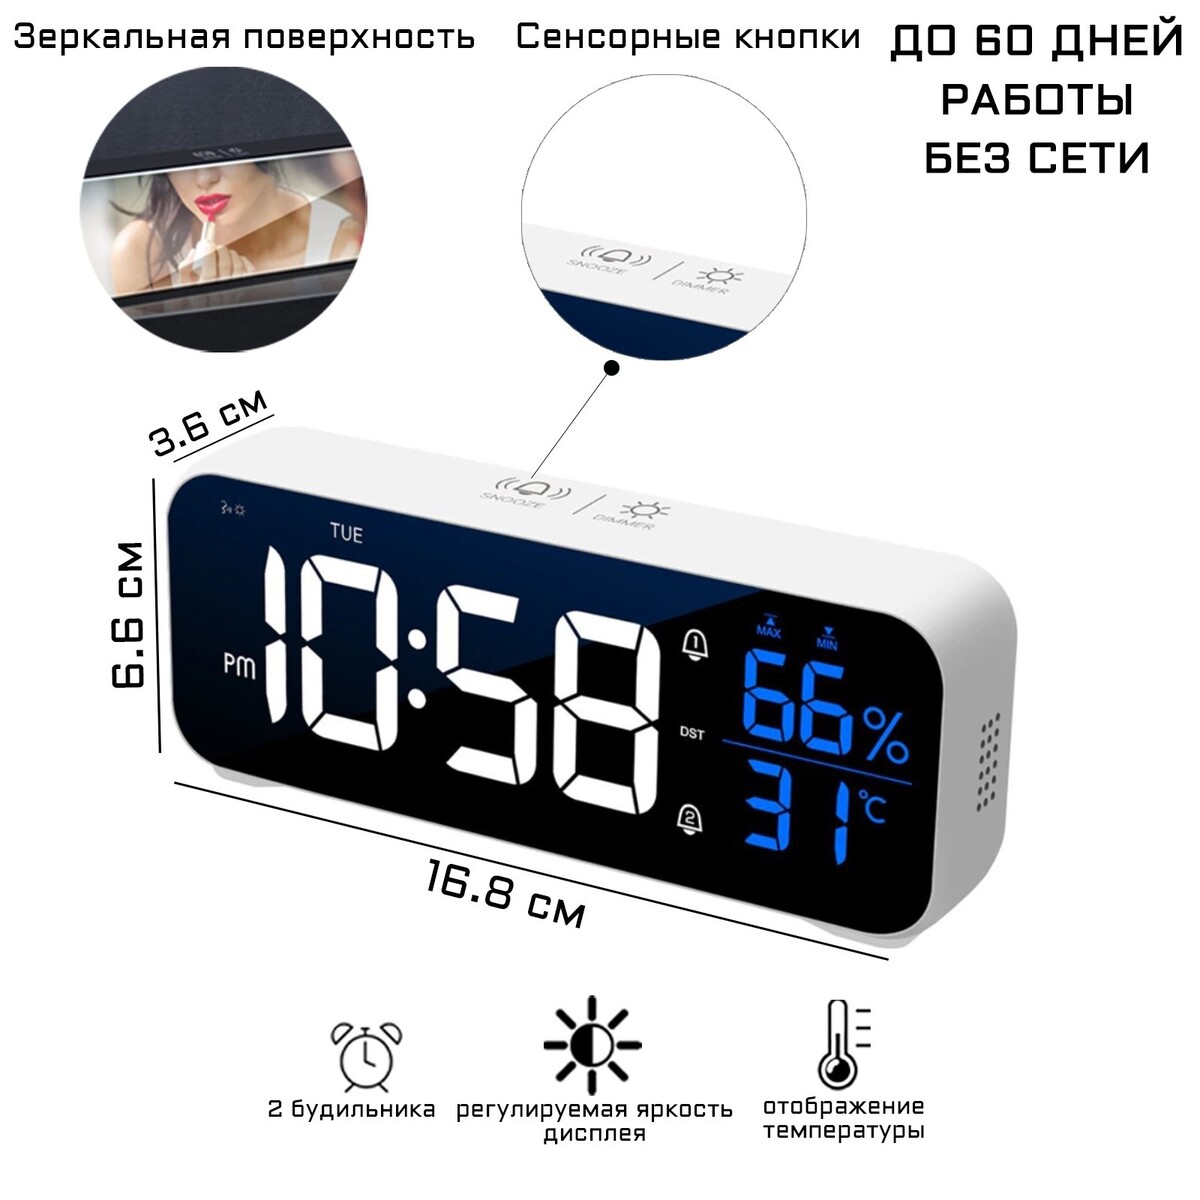 Часы - будильник электронные настольные: календарь, термометр, гигрометр, 16.8 х 6.6 см часы электронные настольные настенные